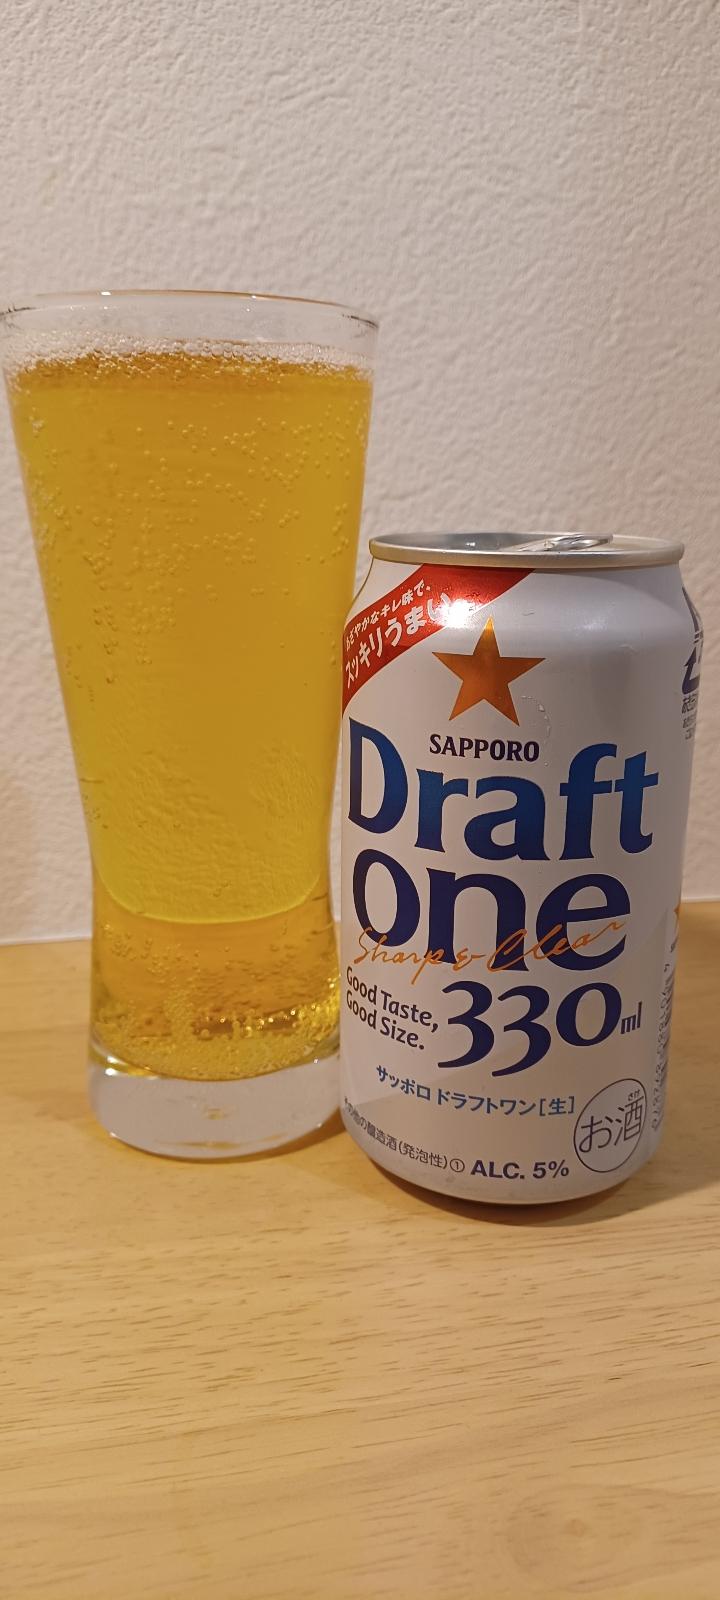 Sapporo Draft One